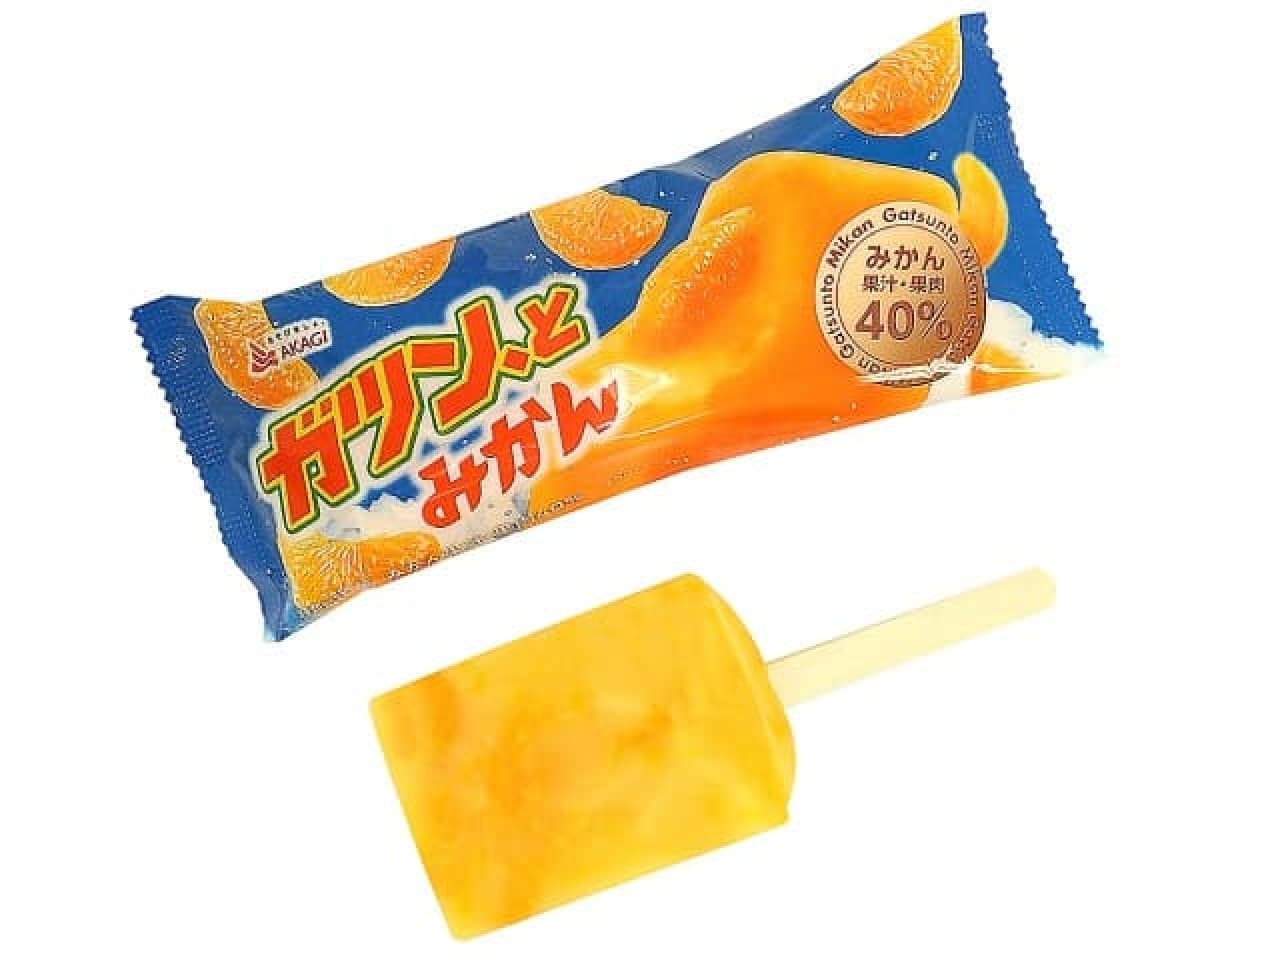 Akagi: Gut and mandarin oranges